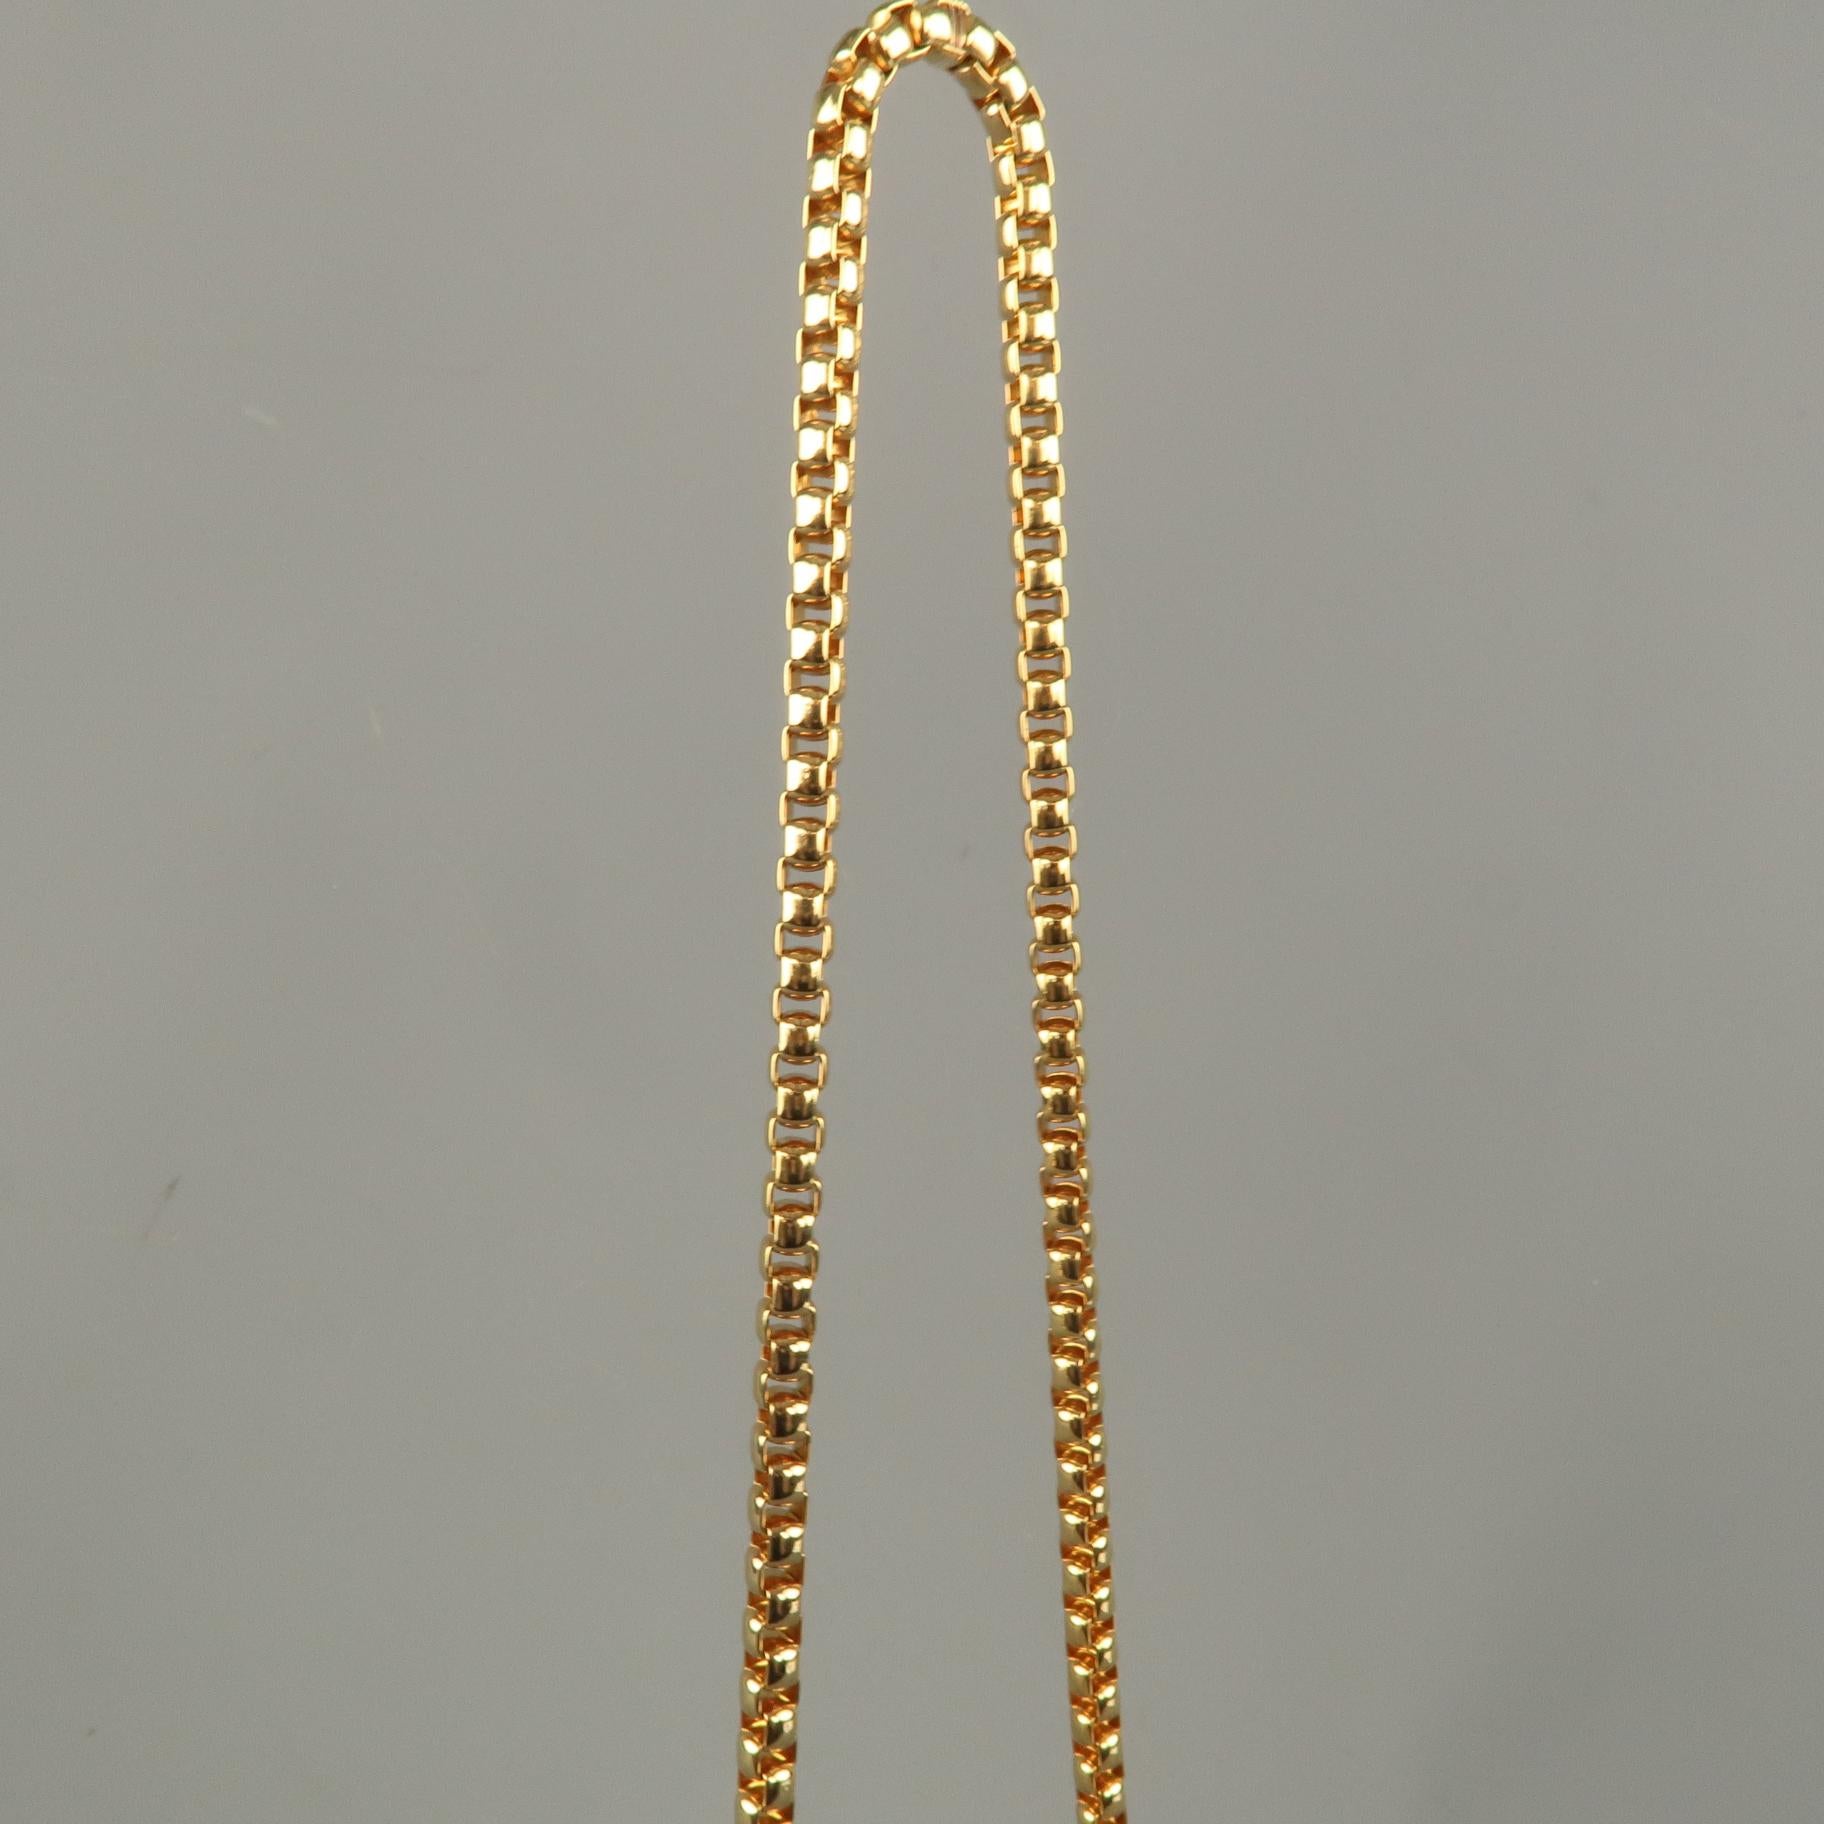 JUDITH LEIBER Cream Lace Textured Silk Crystal Gold Chain Evening Handbag 5